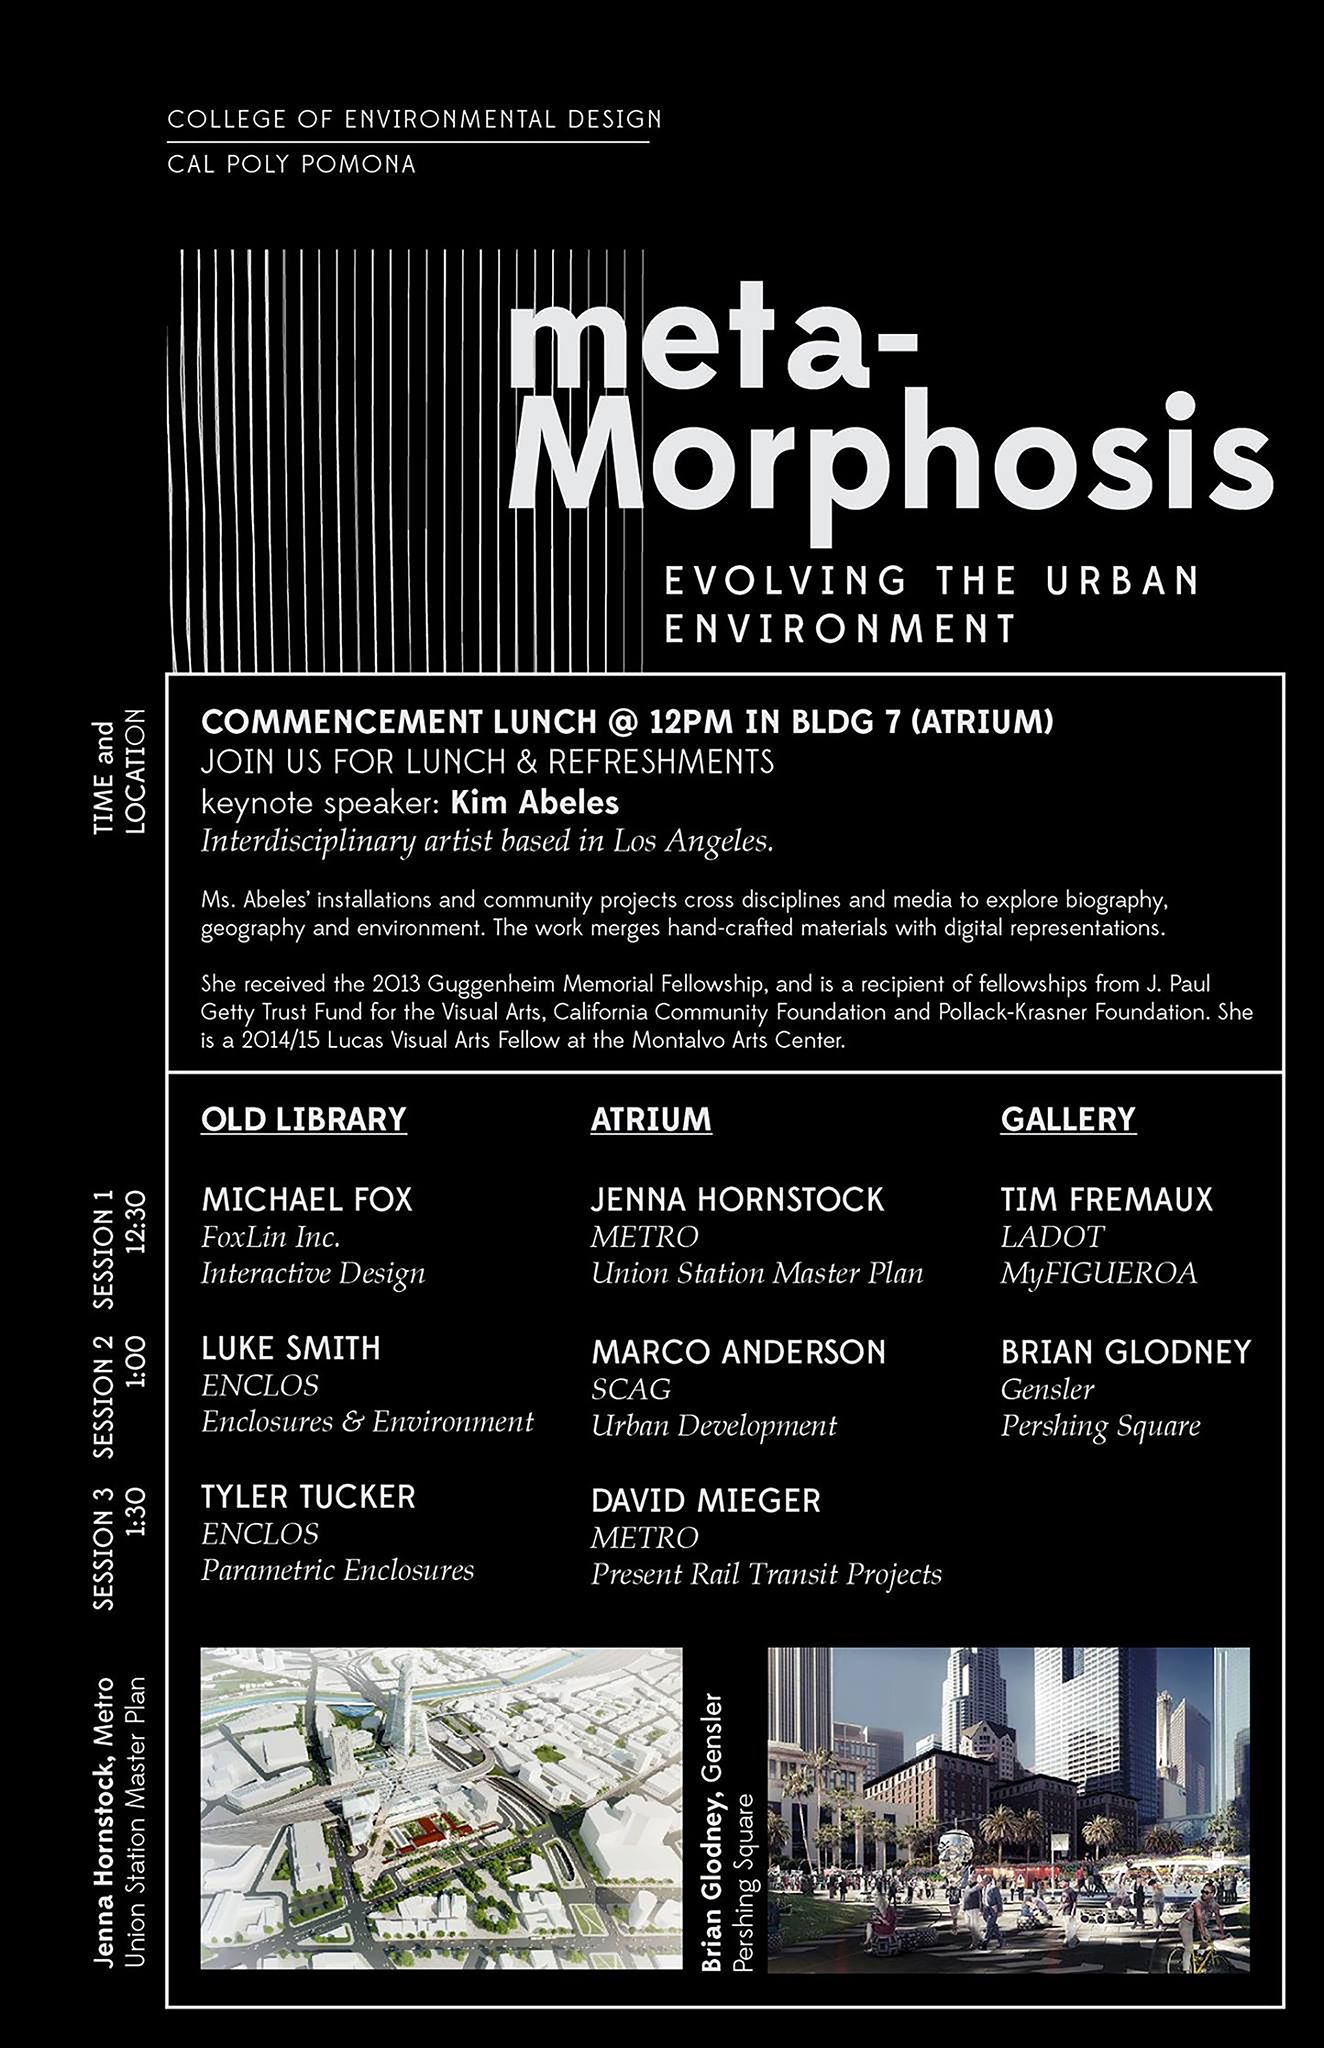 Metamorphosis: Evolving the Urban Environment